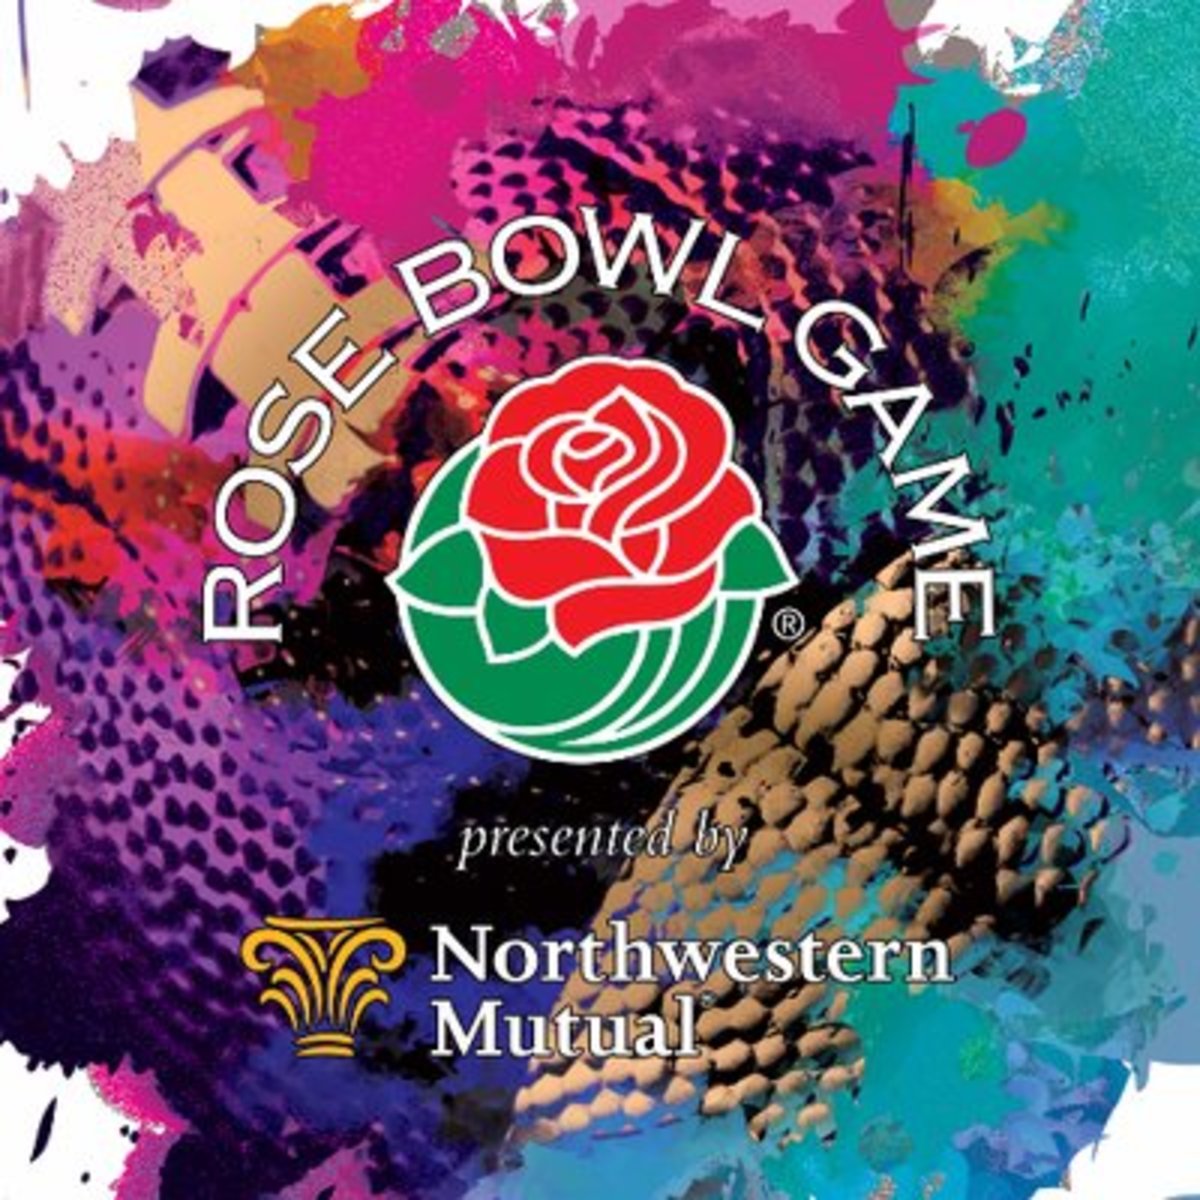 The Rose Bowl logo.